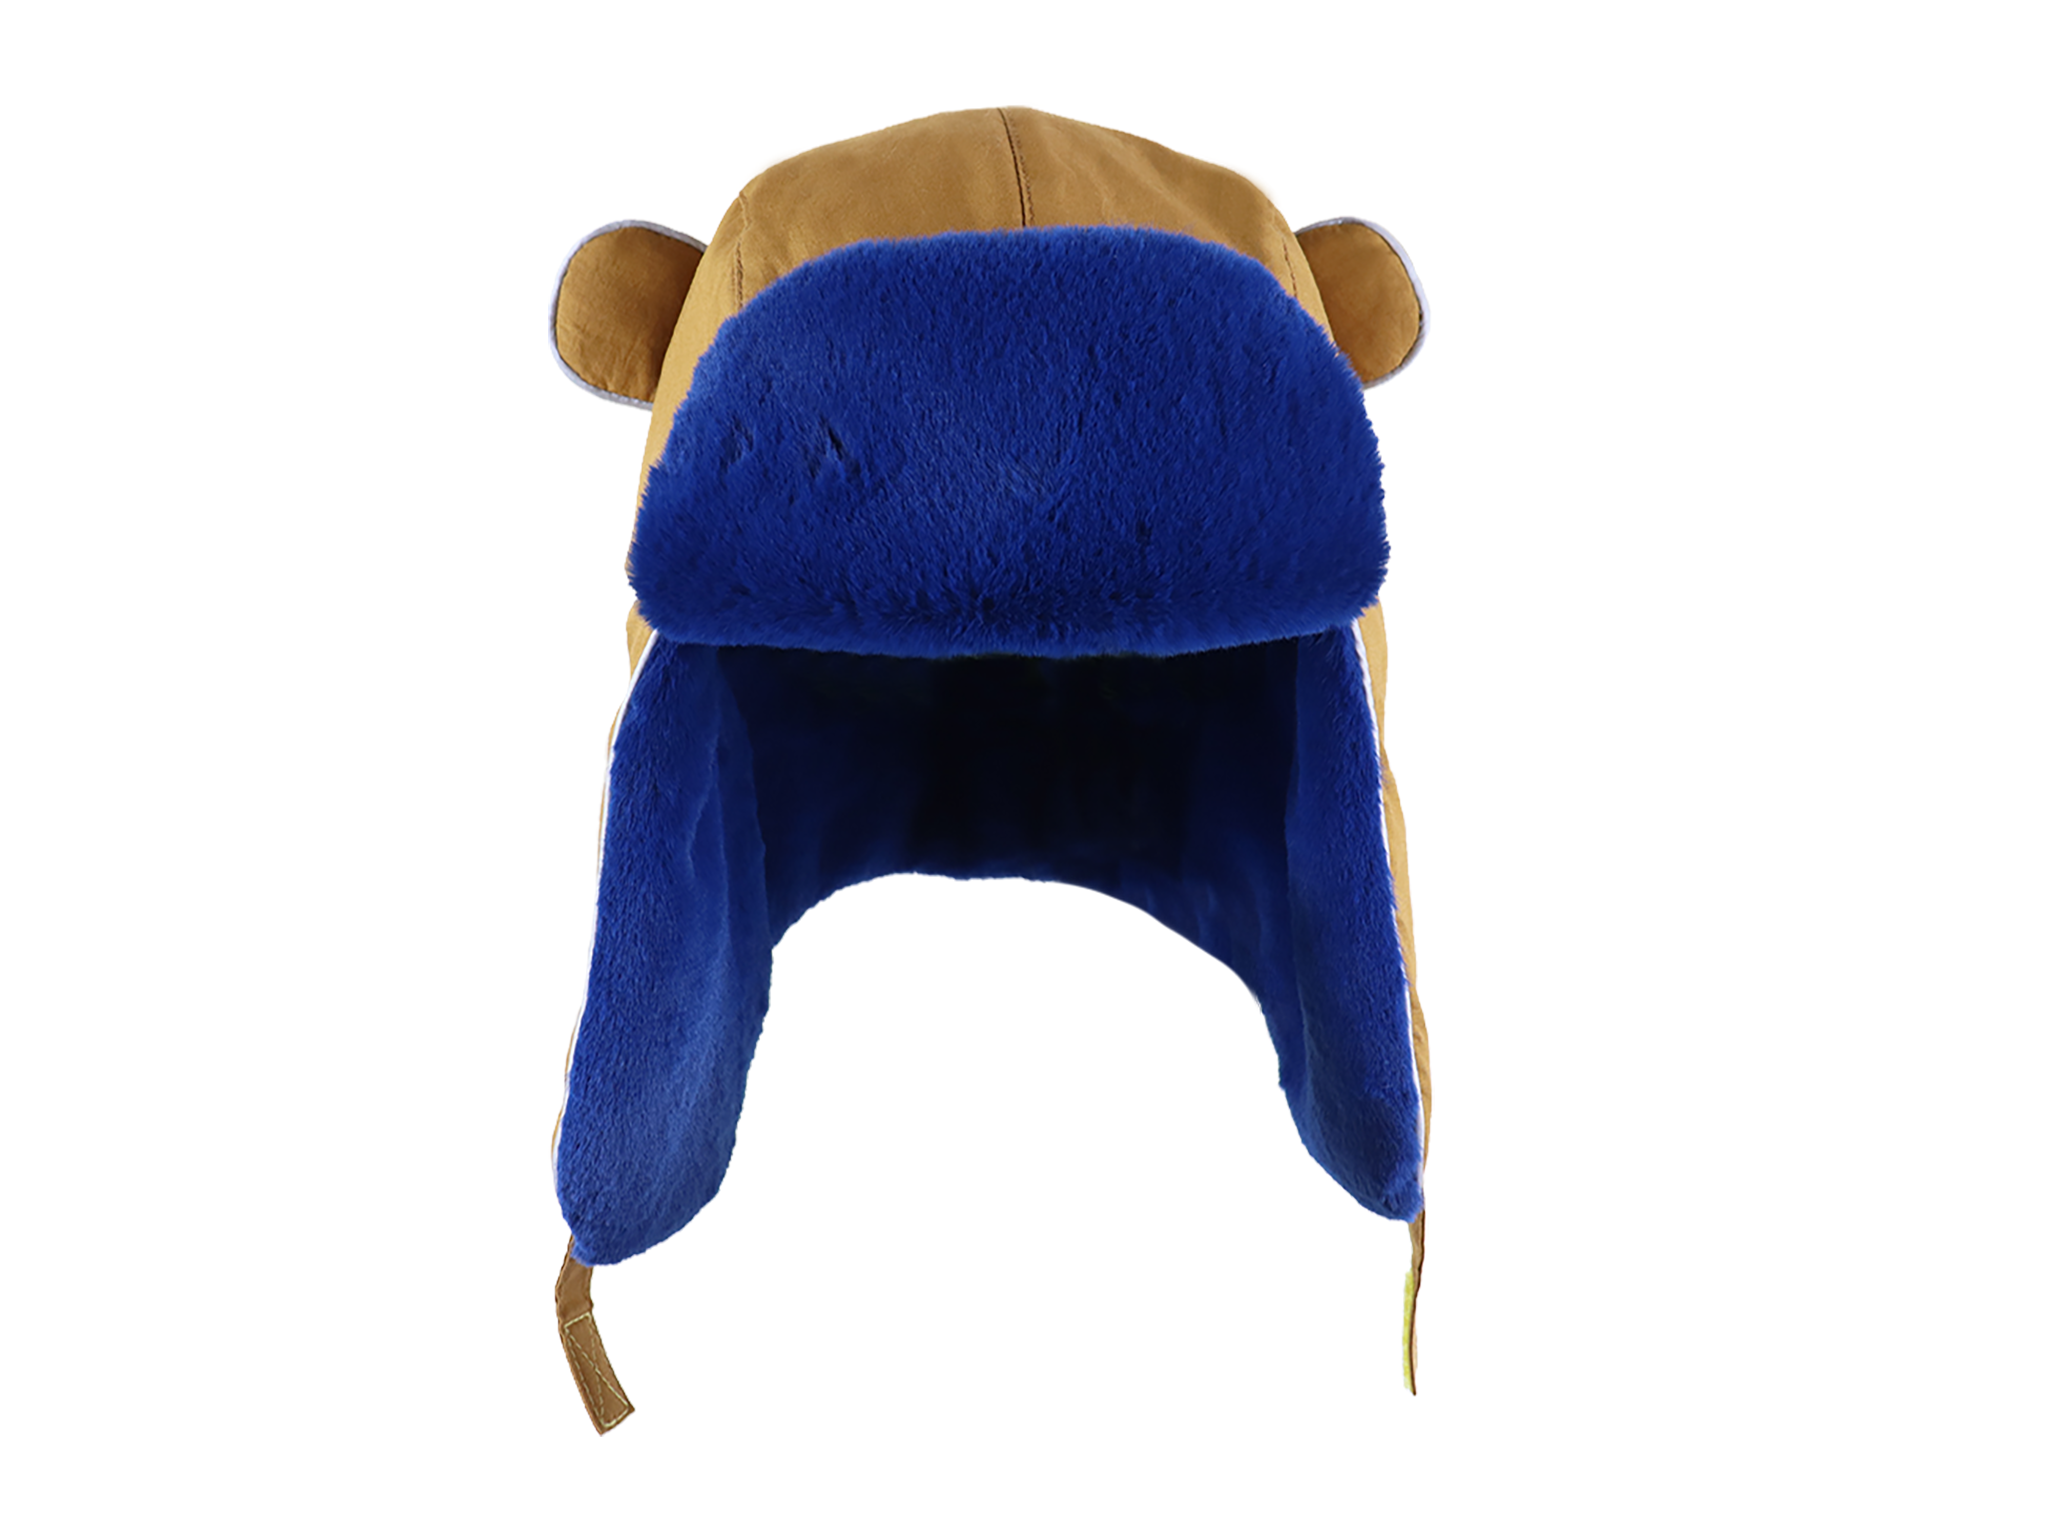 Little Hot Dog Watson arctic cub hat